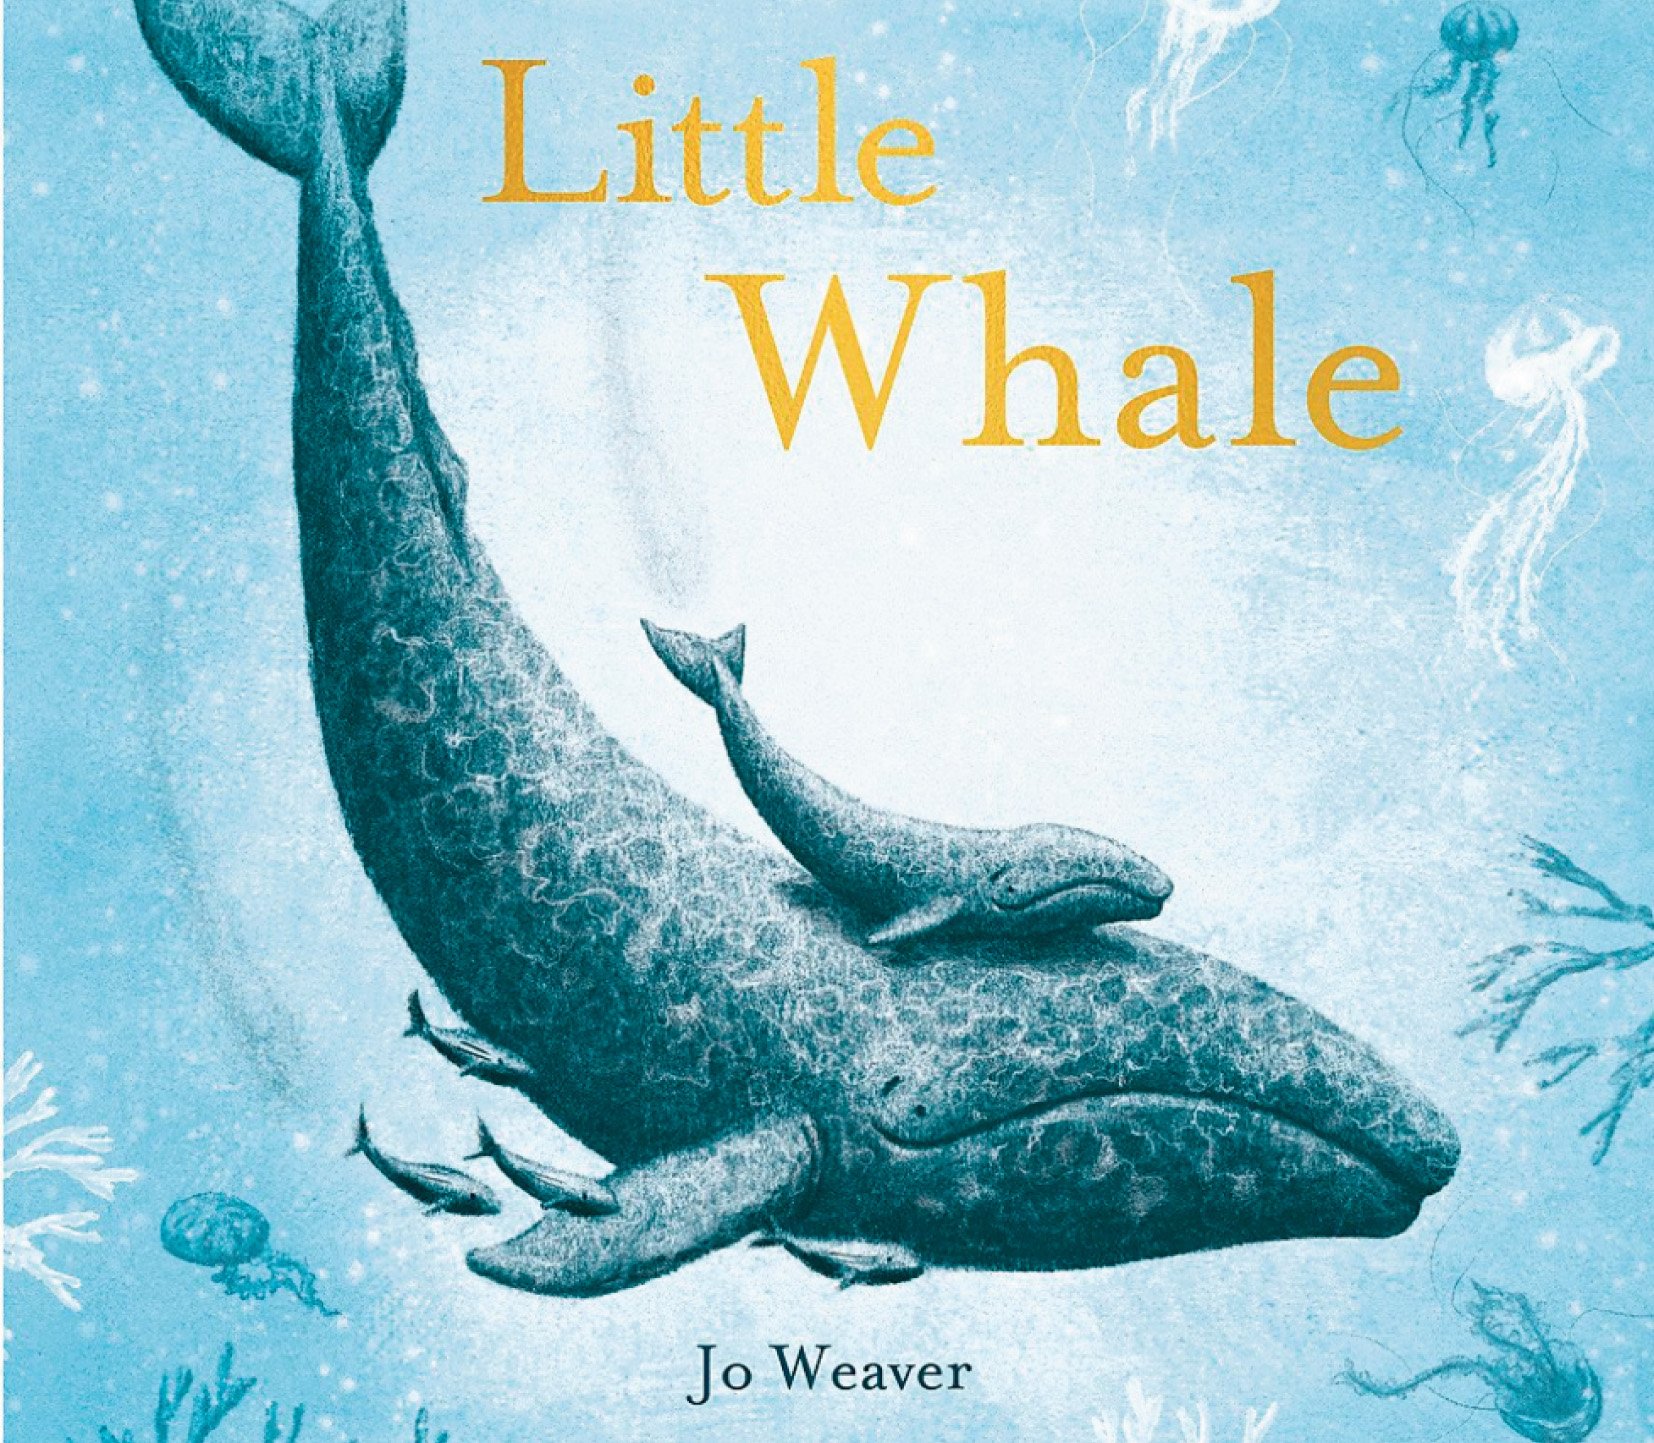 jo-weaver-little-whale-cover.jpg